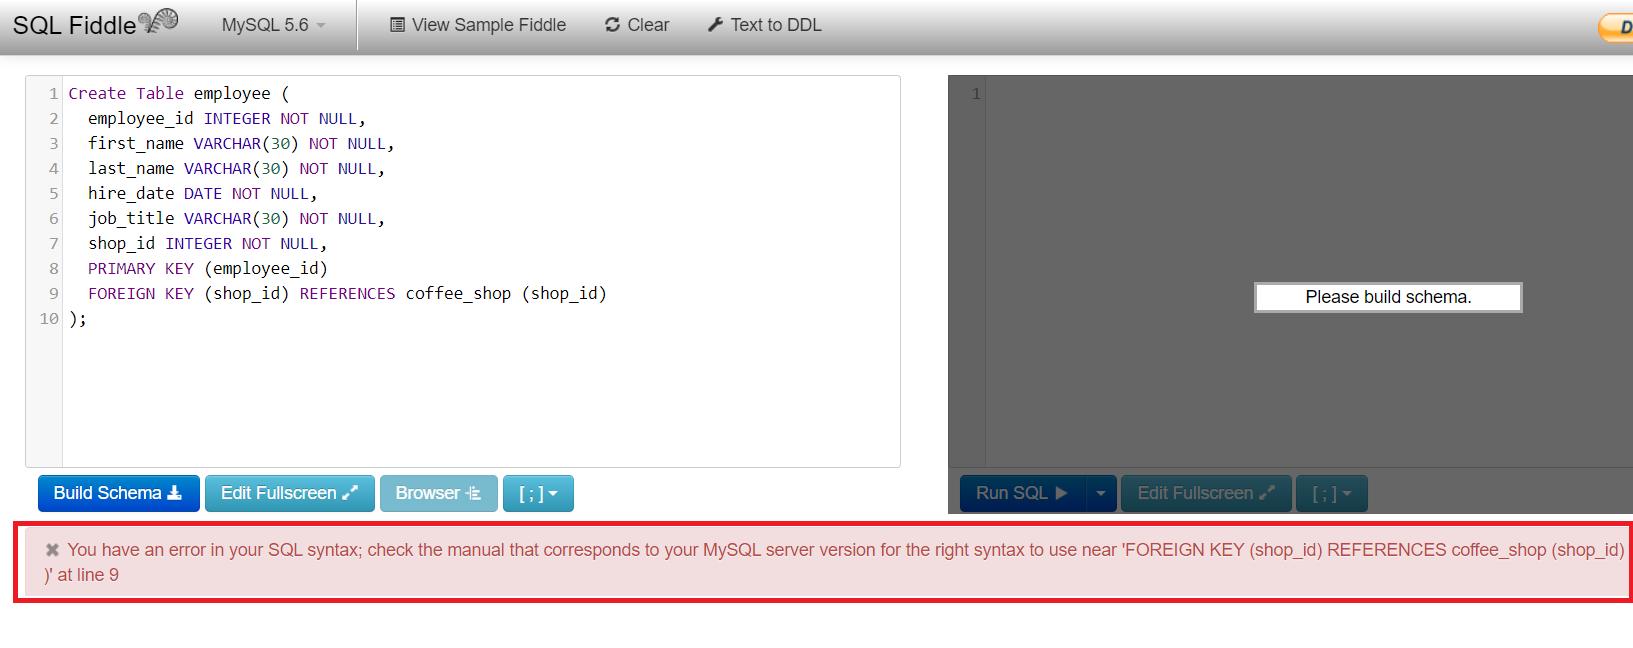 SQL Fiddle MySQL 5.6 Build Schema View Sample Fiddle 1 Create Table employee ( 2 employee_id INTEGER NOT